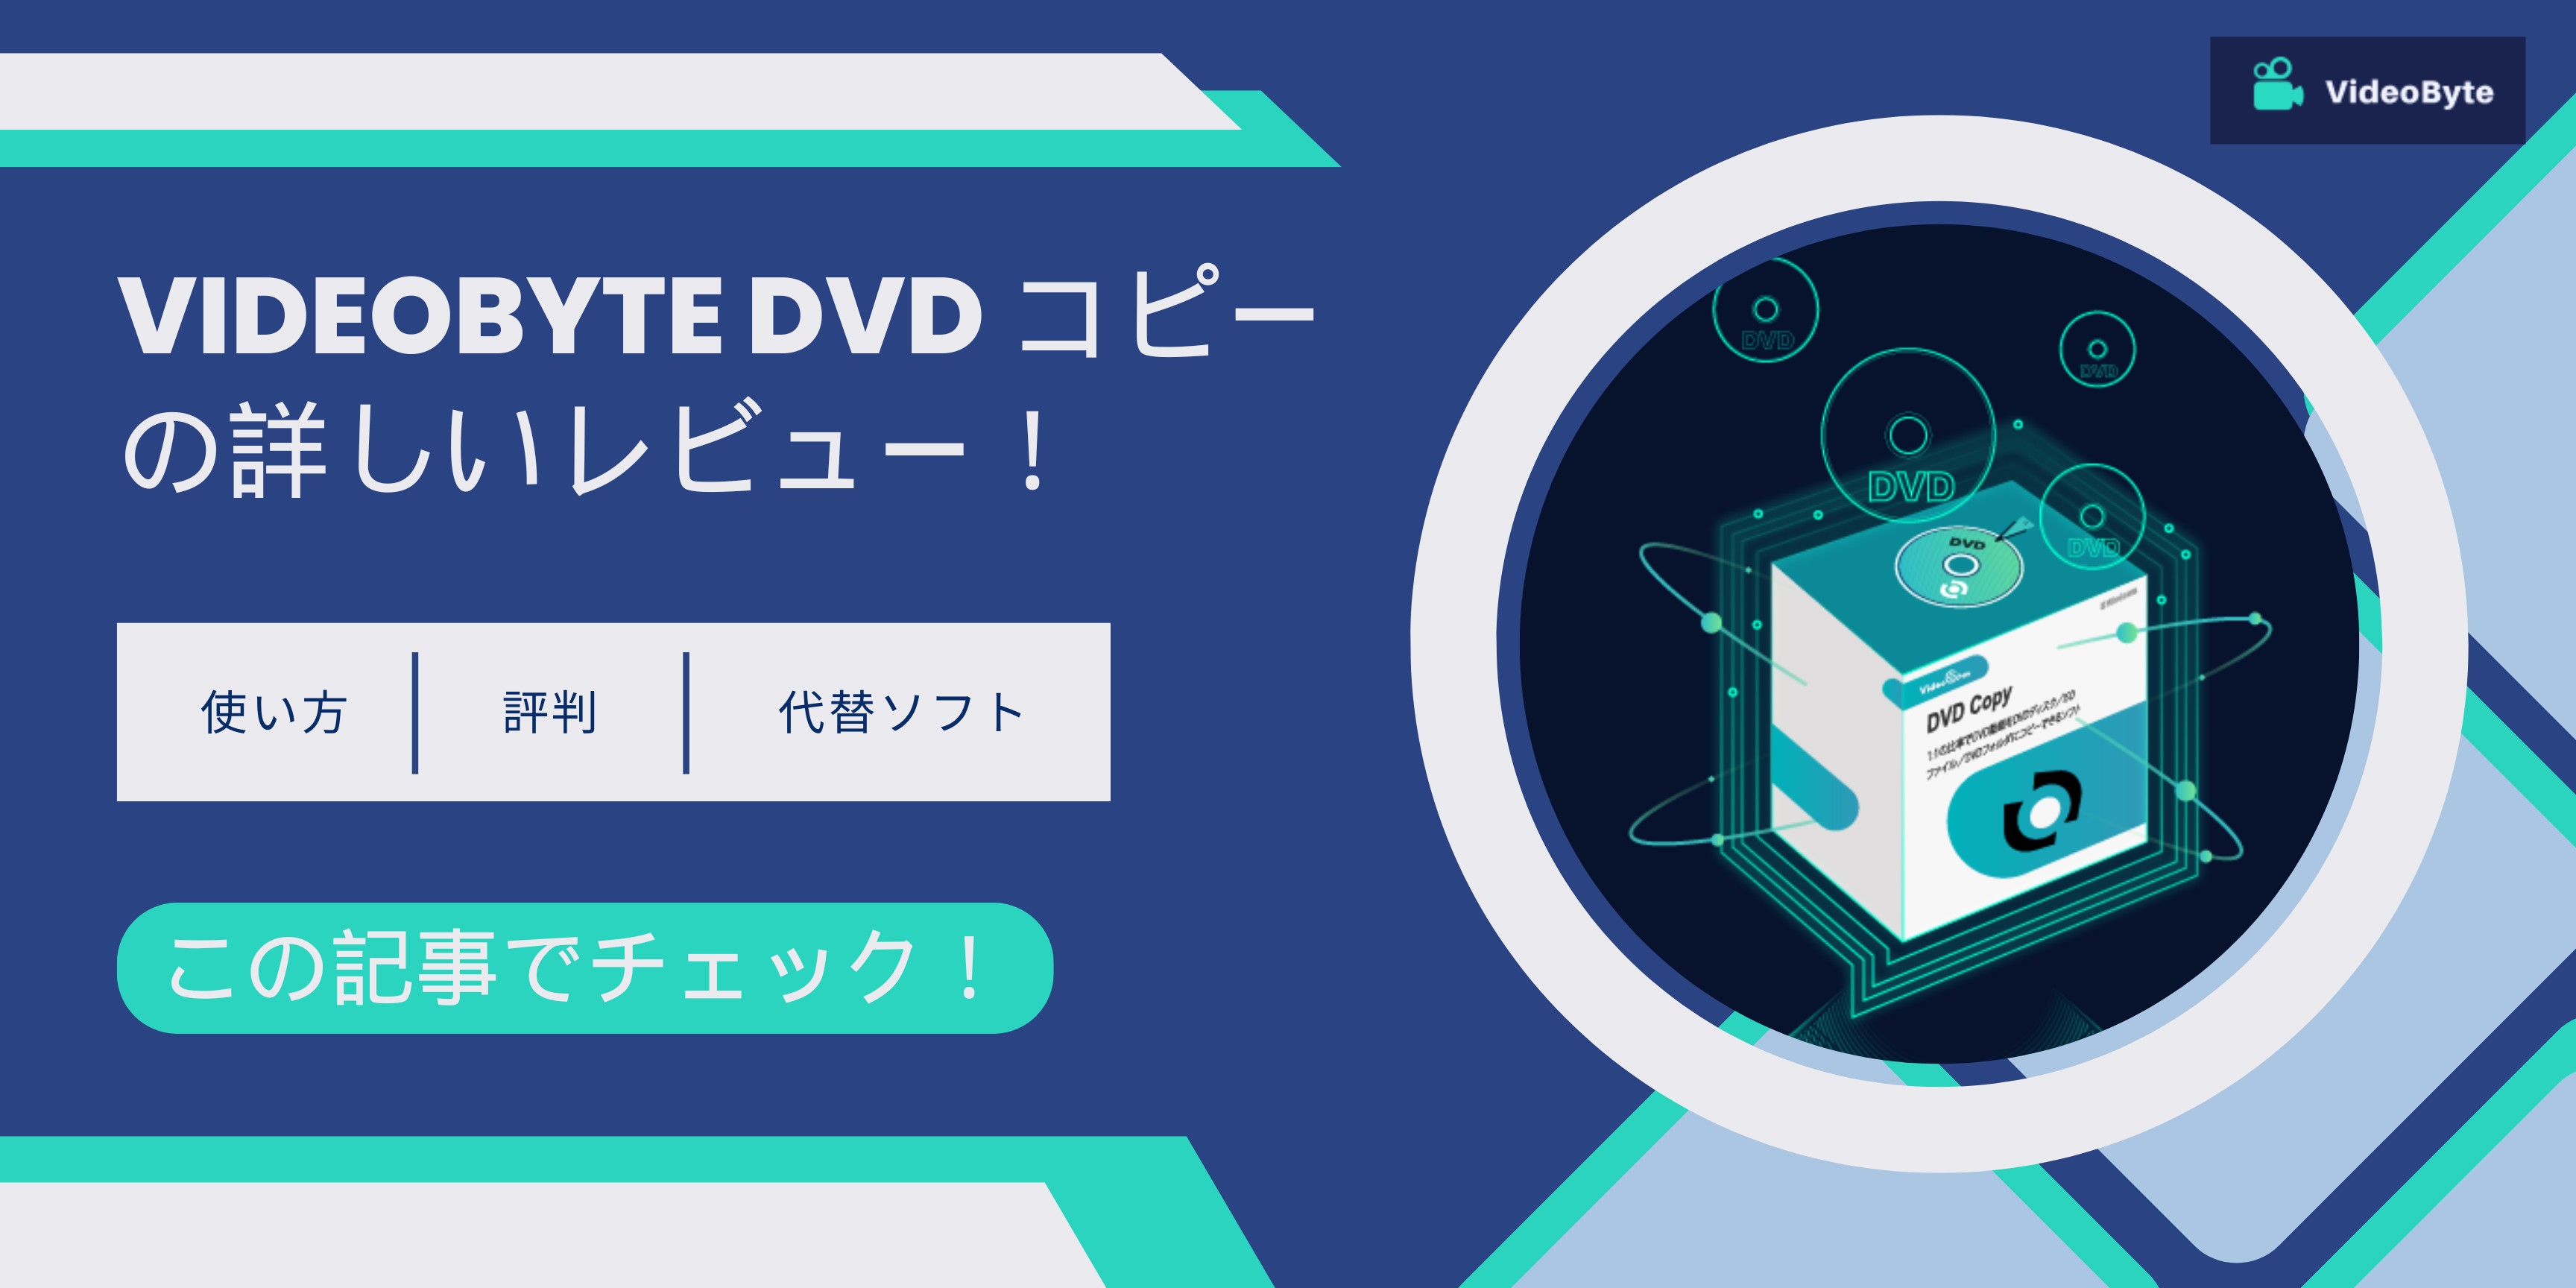 VideoByte DVD コピーの詳しいレビュー！使い方・価格・評判・代替品を解説～